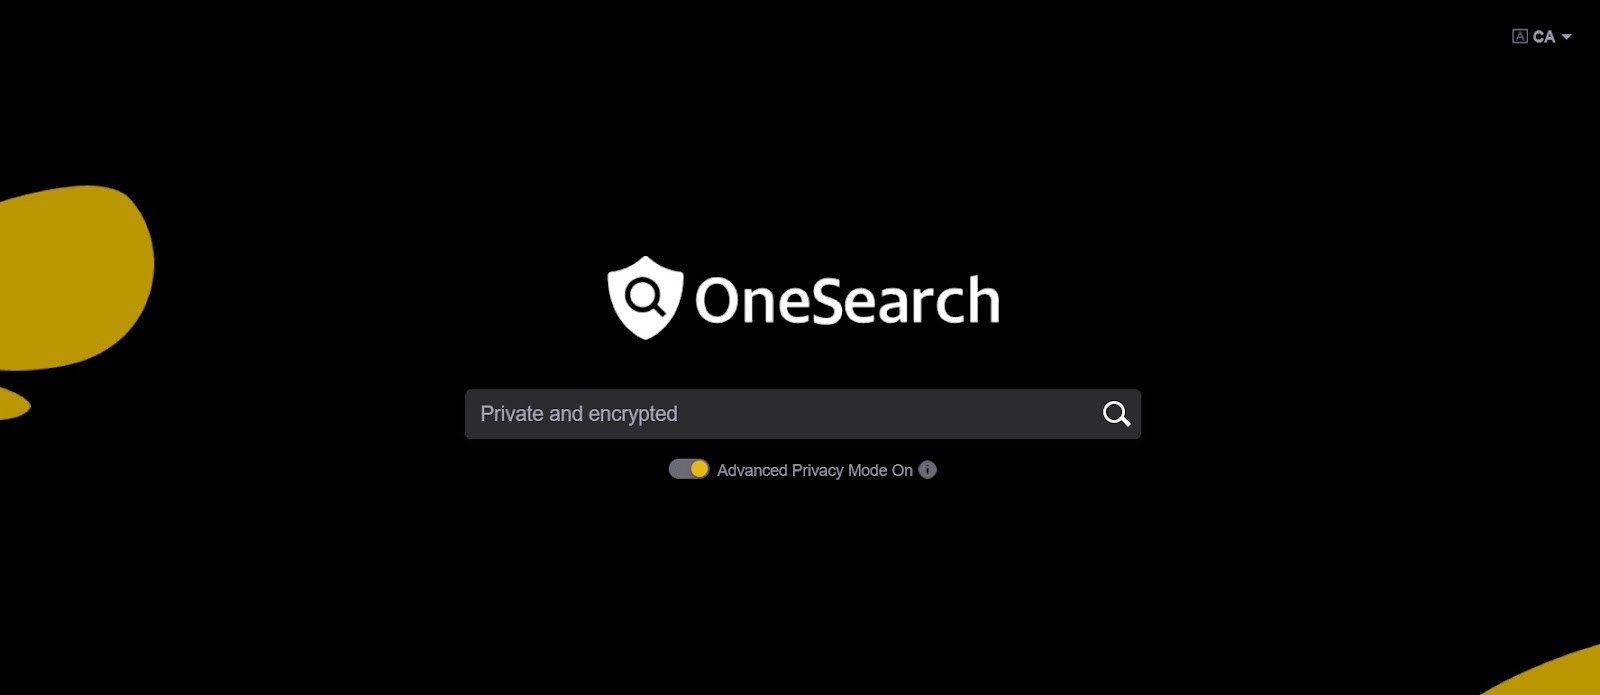 OneSearch - альтернатива гугл